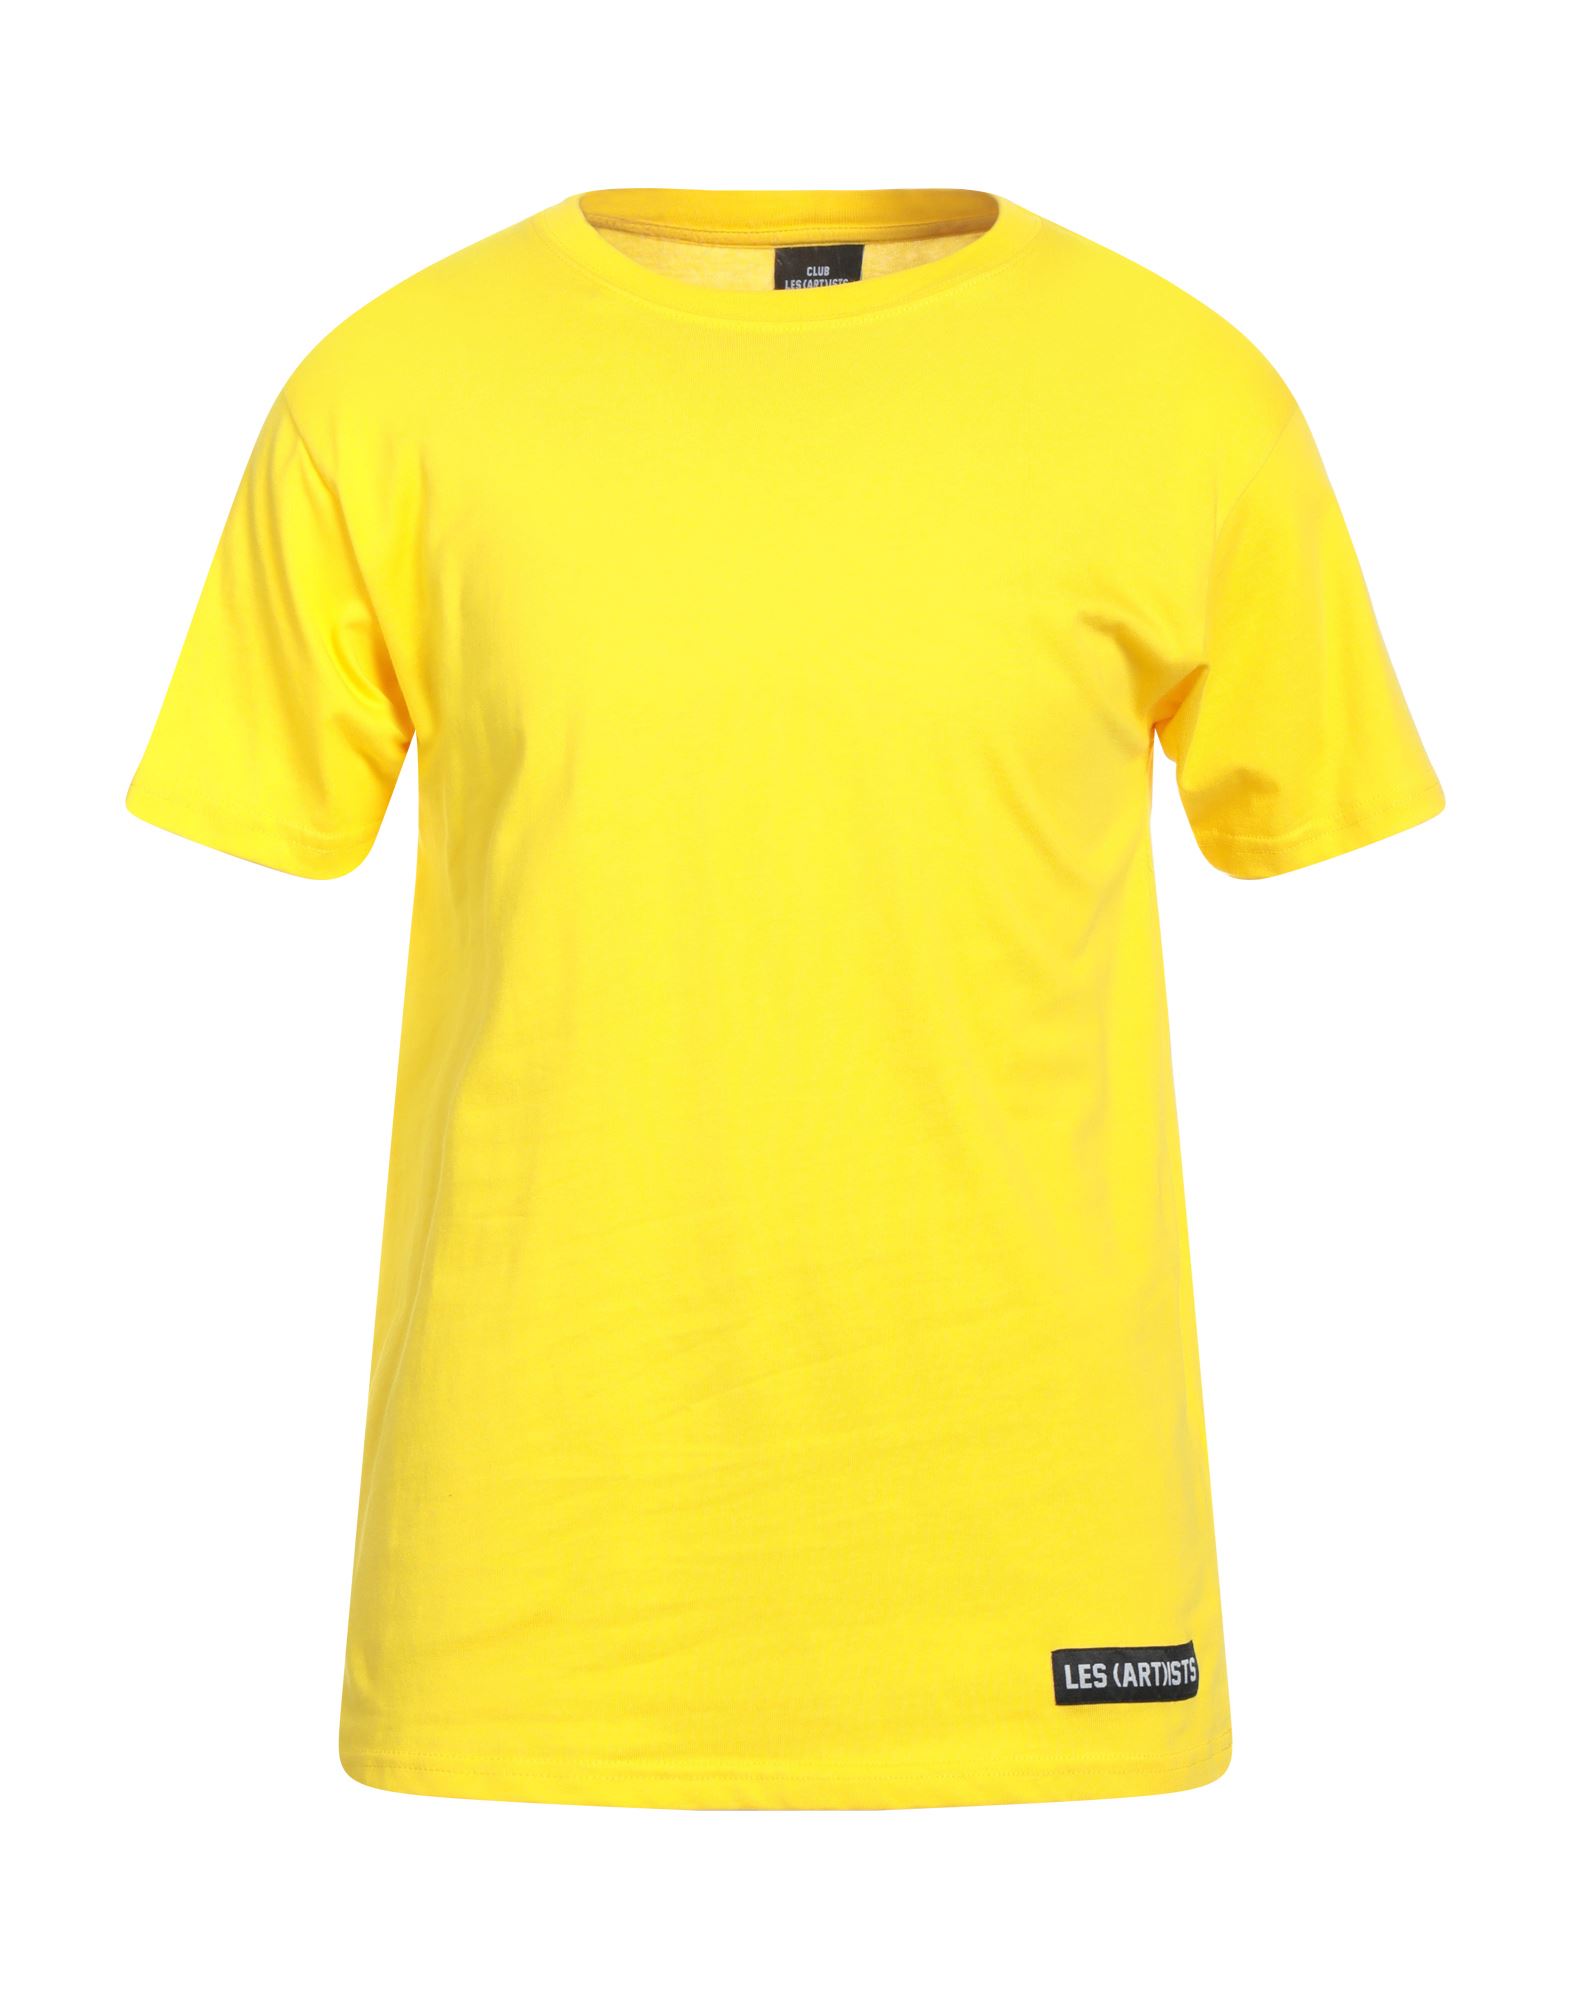 Les Artists Les (art)ists Man T-shirt Yellow Size S Cotton